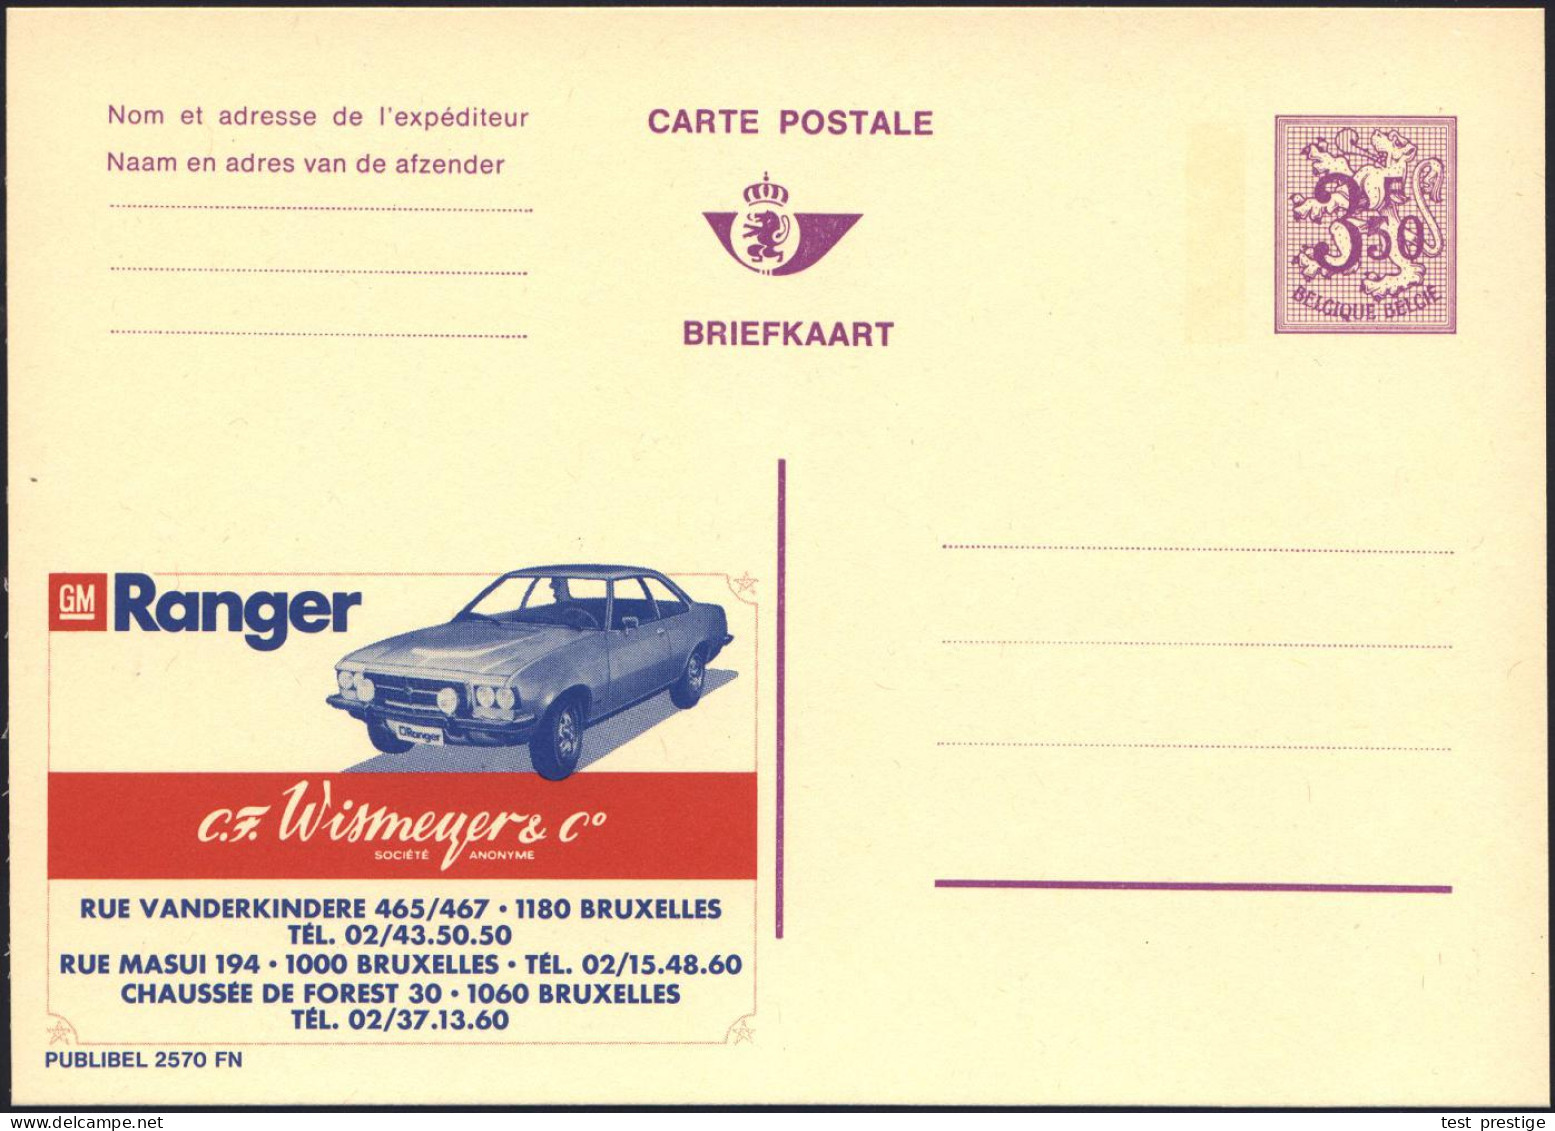 BELGIEN 1972 3,50 F. Reklame-P., Wappenlöwe, Viol.: GM Ranger/C. F. Wismeyer & Co.. = Ranger Limousine , Ungebr. (Mi.P 3 - KFZ